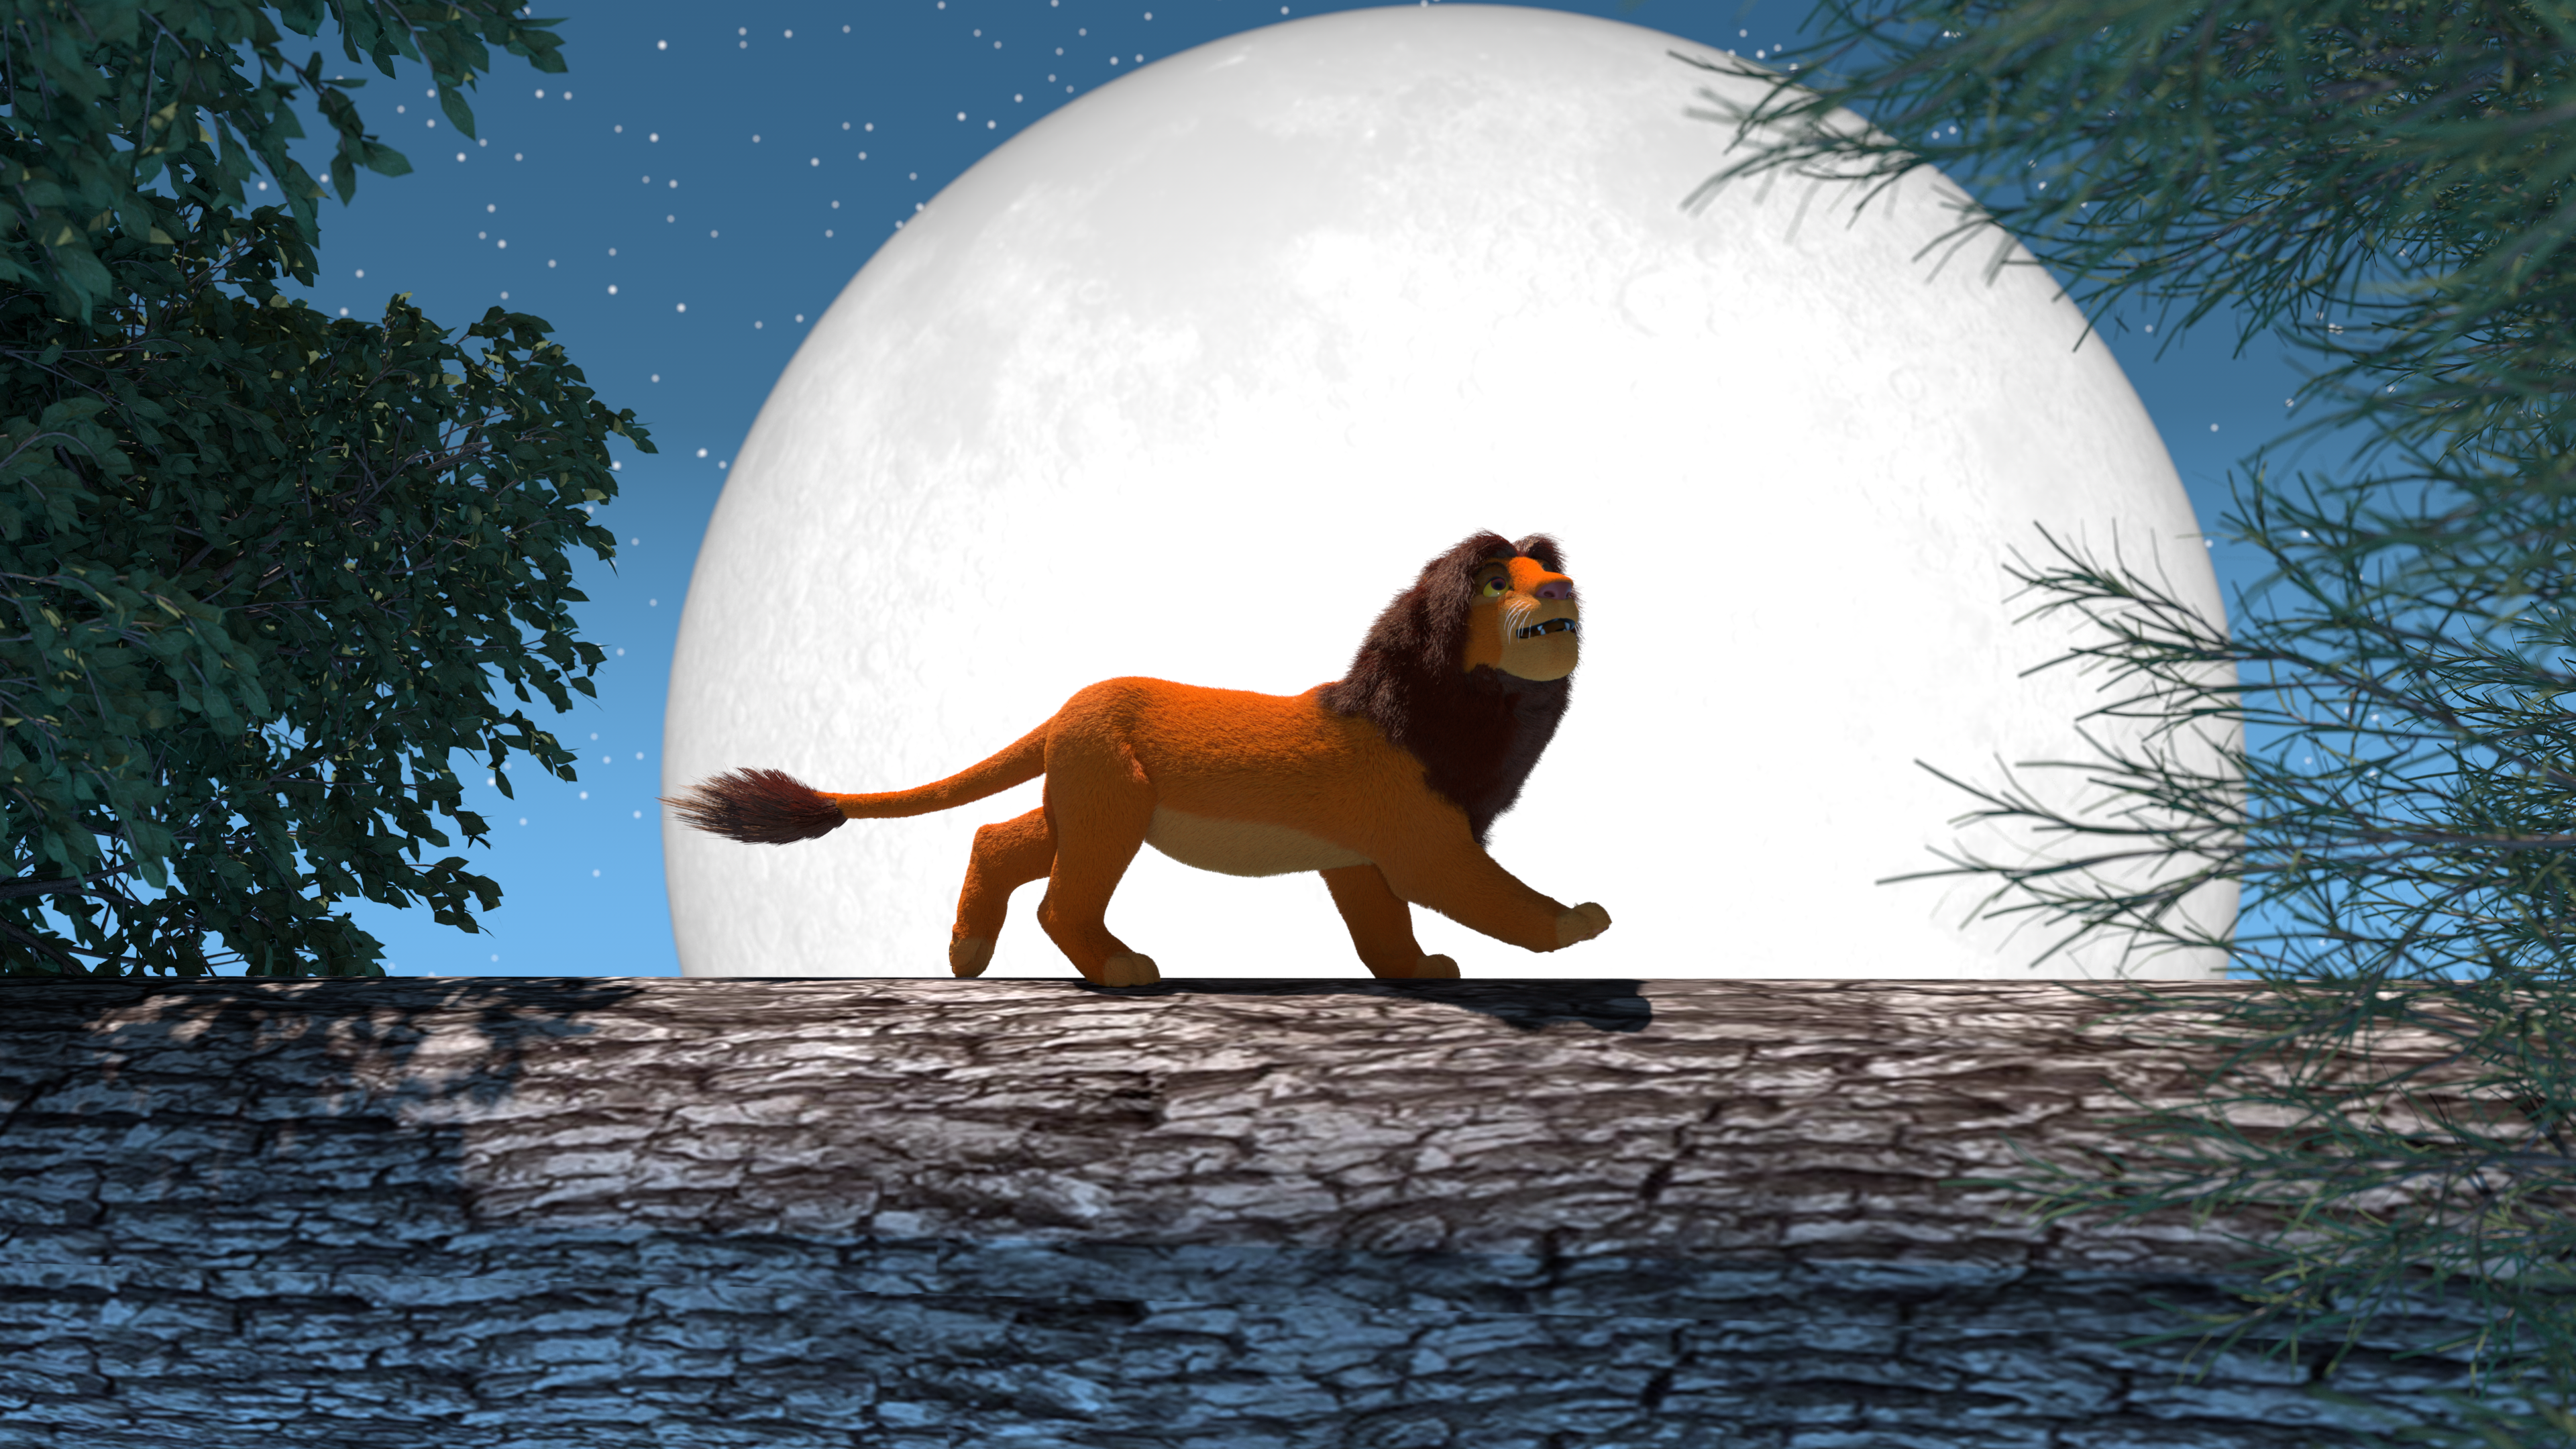 Melodramático entrega delincuencia Simba The Lion King 3D Model by JaxerWolf on DeviantArt